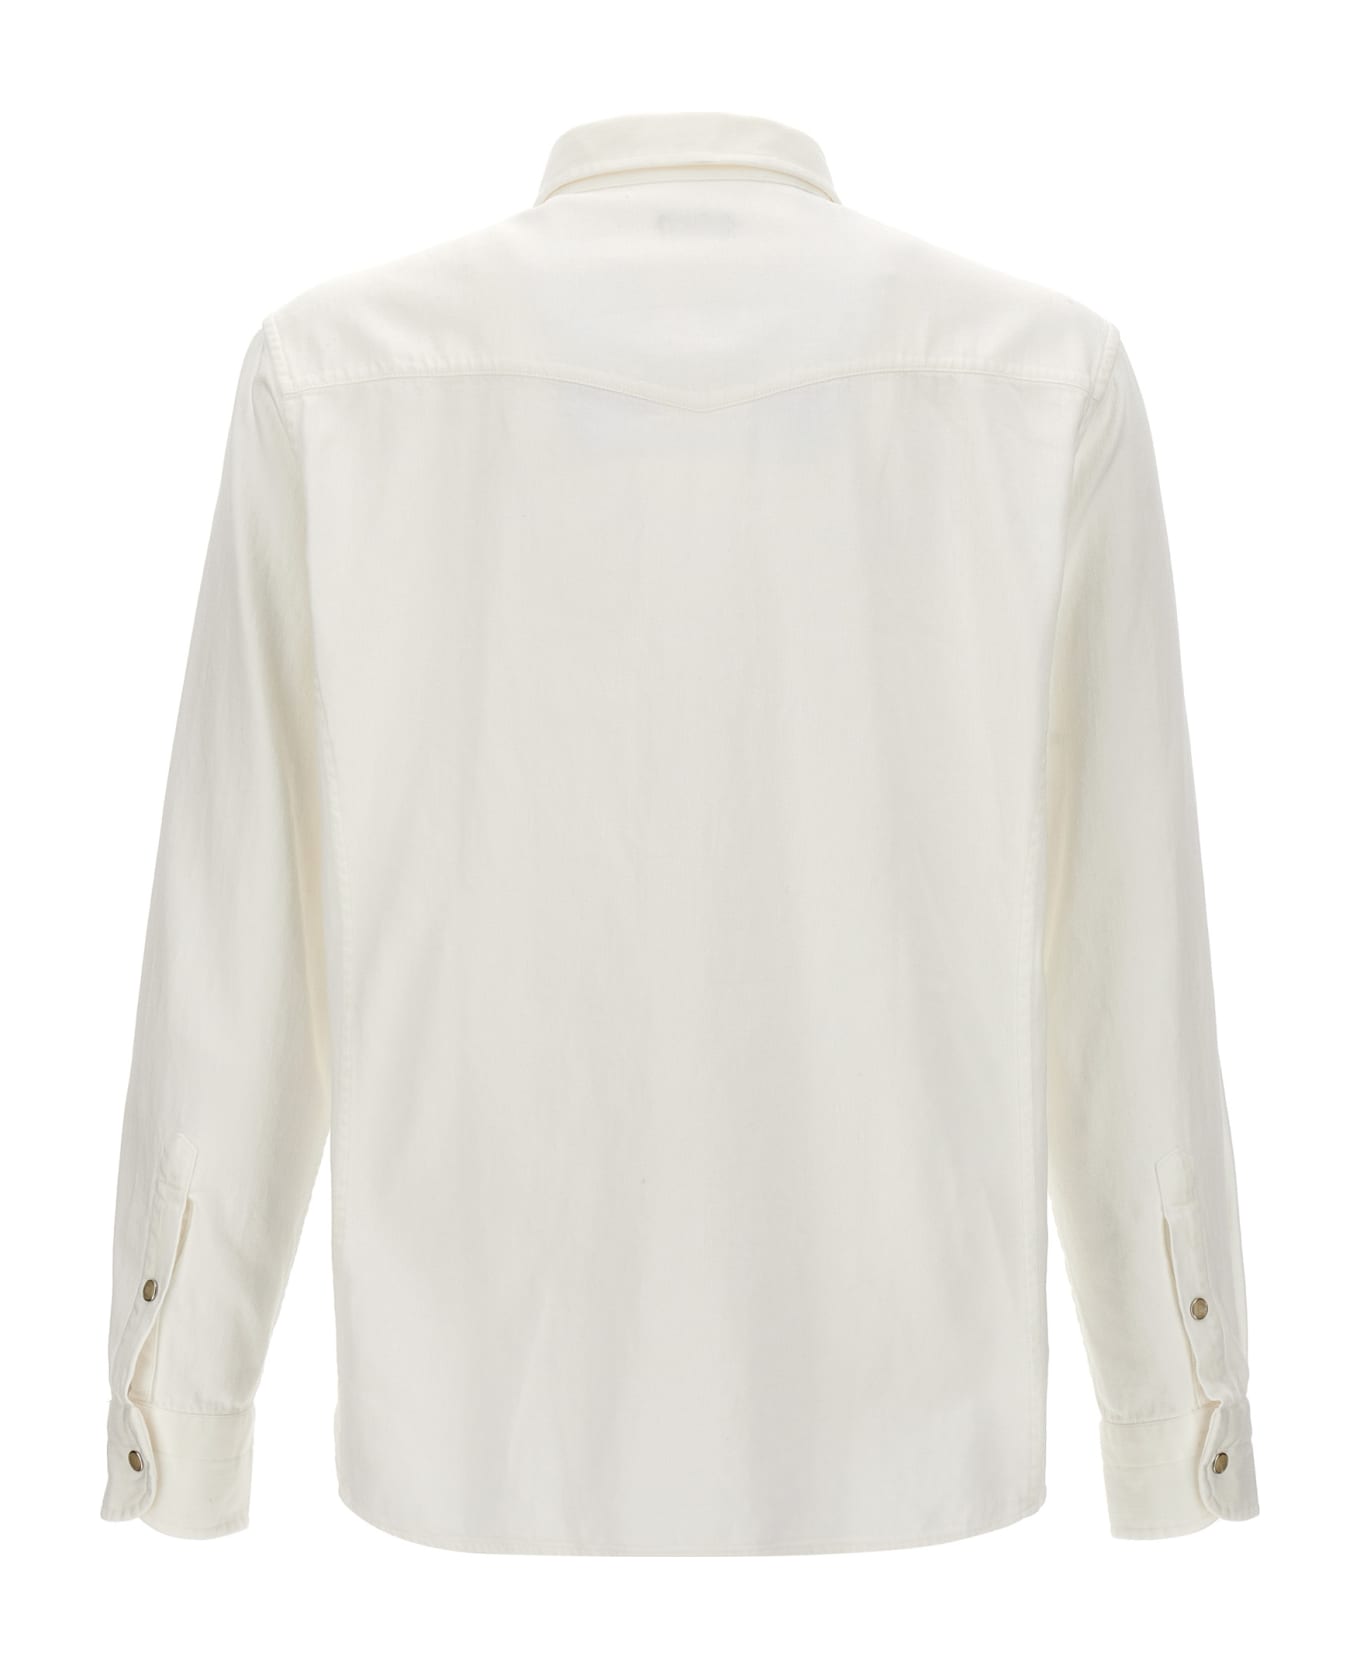 Tom Ford Denim Shirt - White シャツ